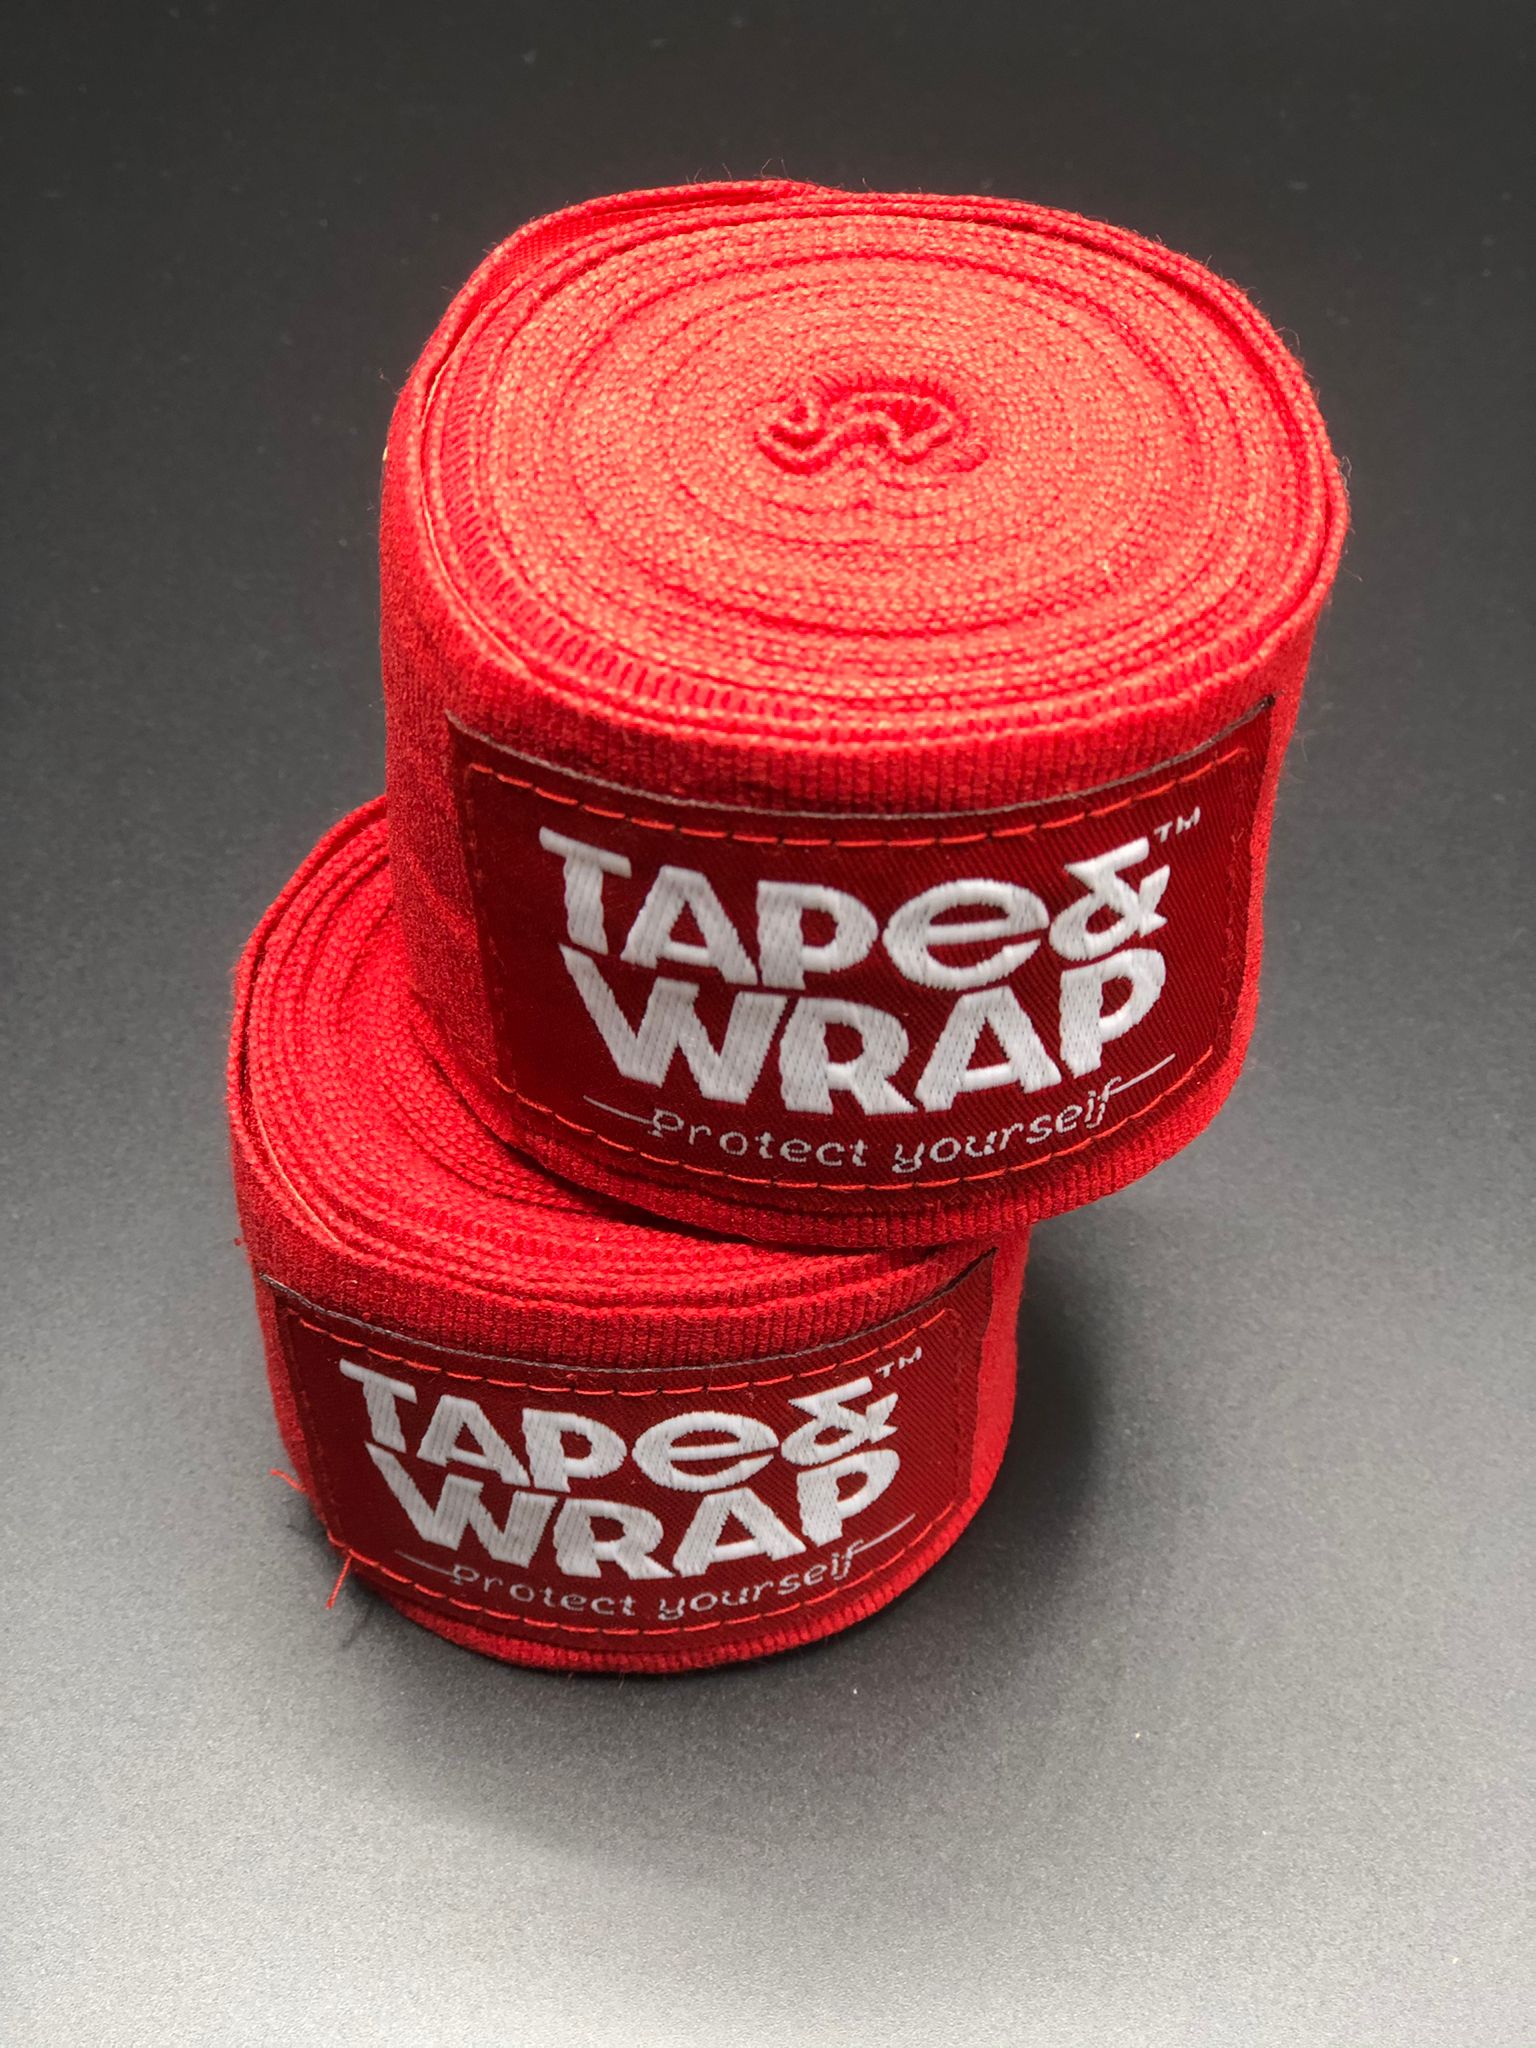 Casco protector de barra T&W – Tape&Wrap